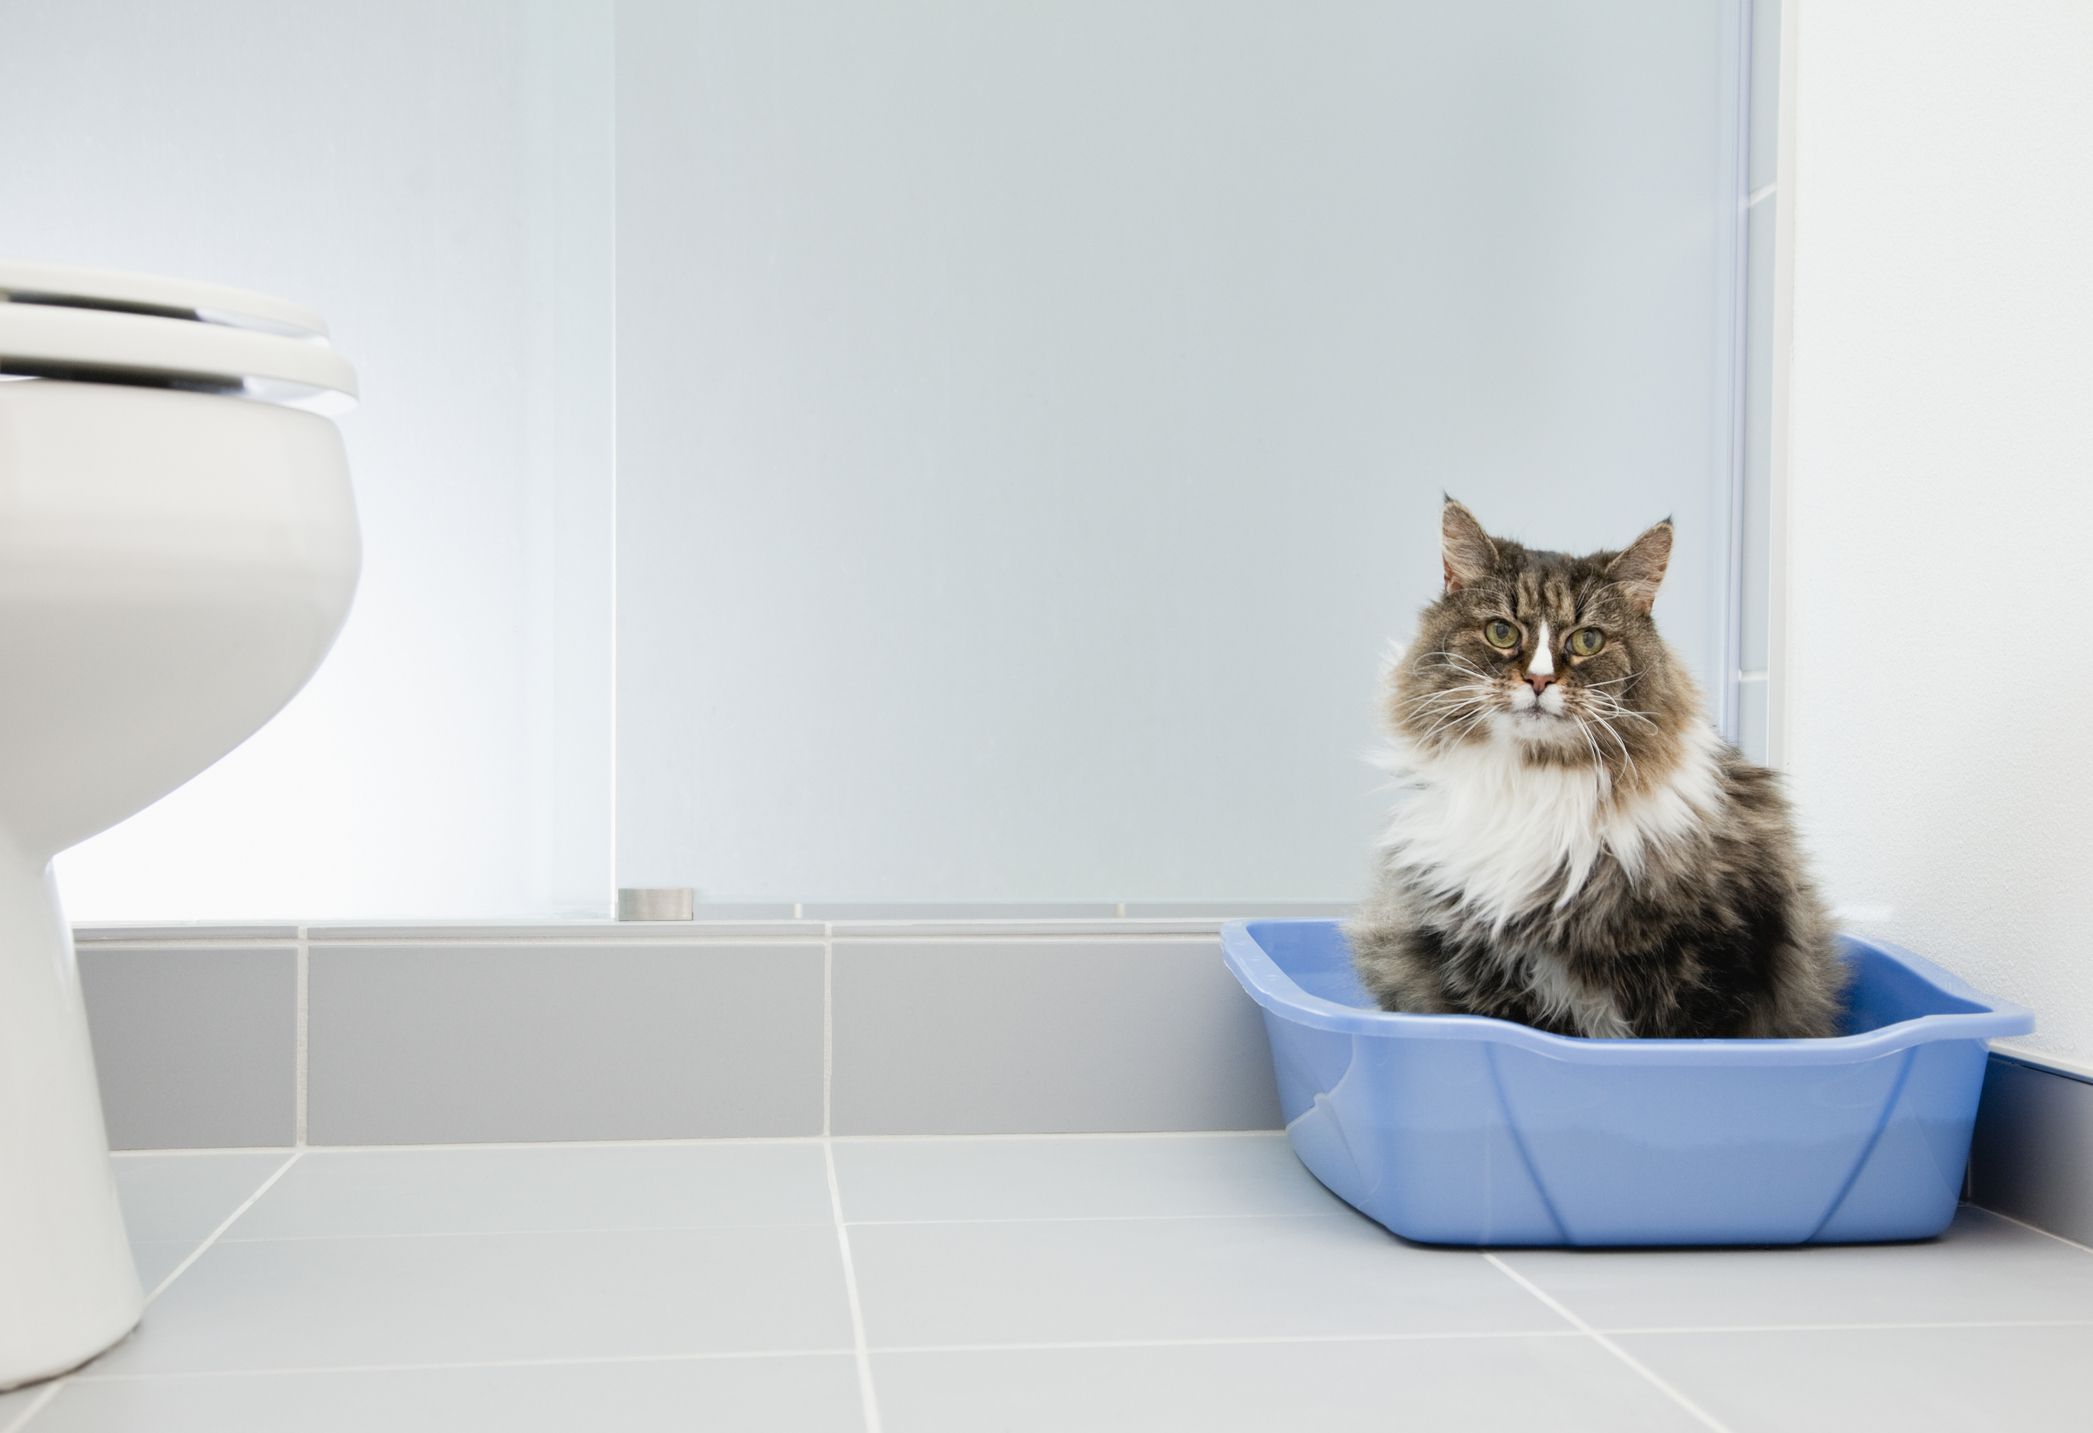 Cat sitting in a blue litter box in a bathroom.